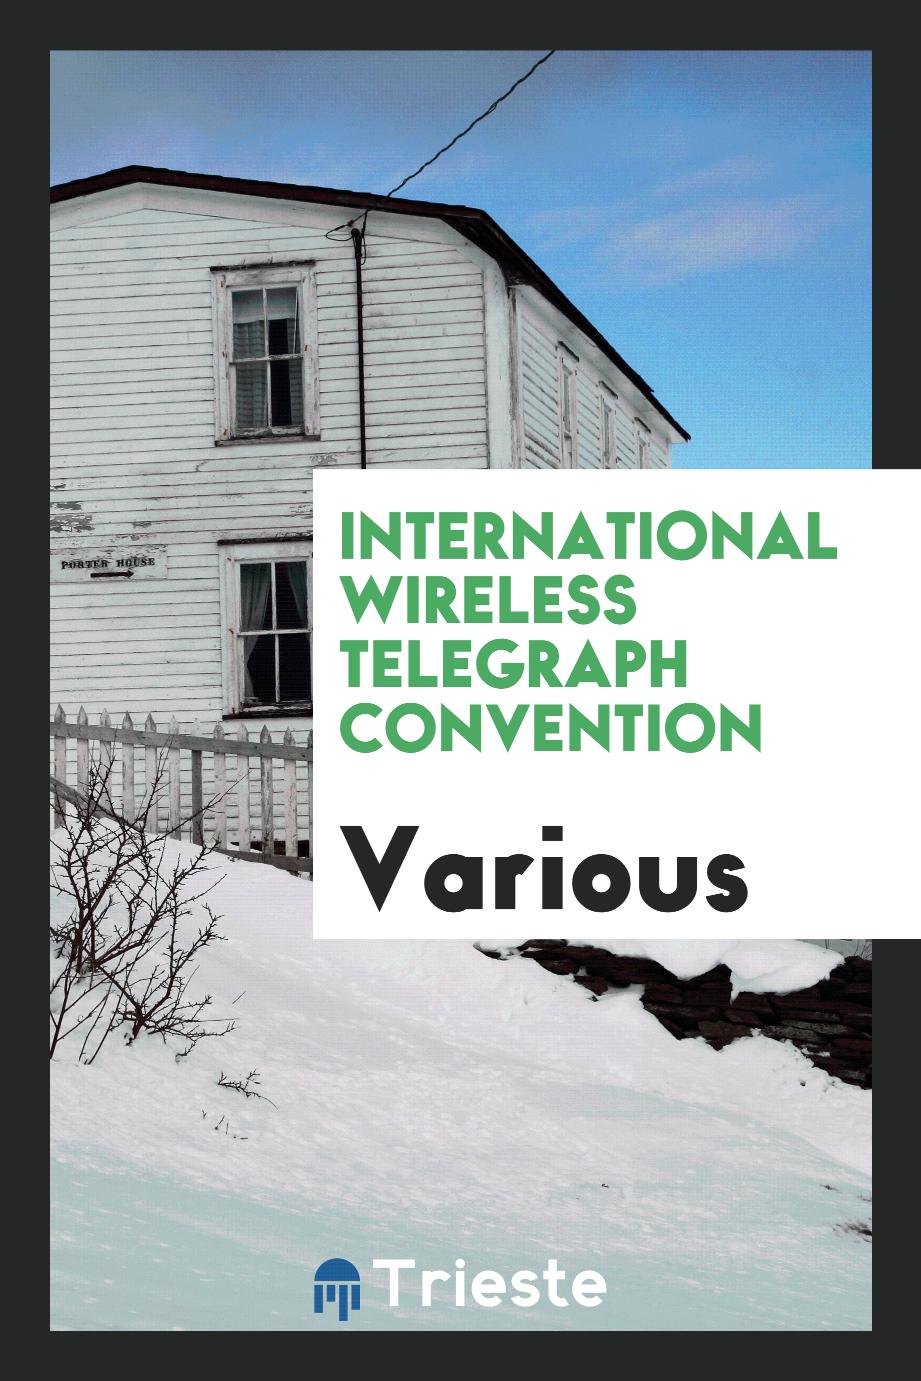 International wireless telegraph convention